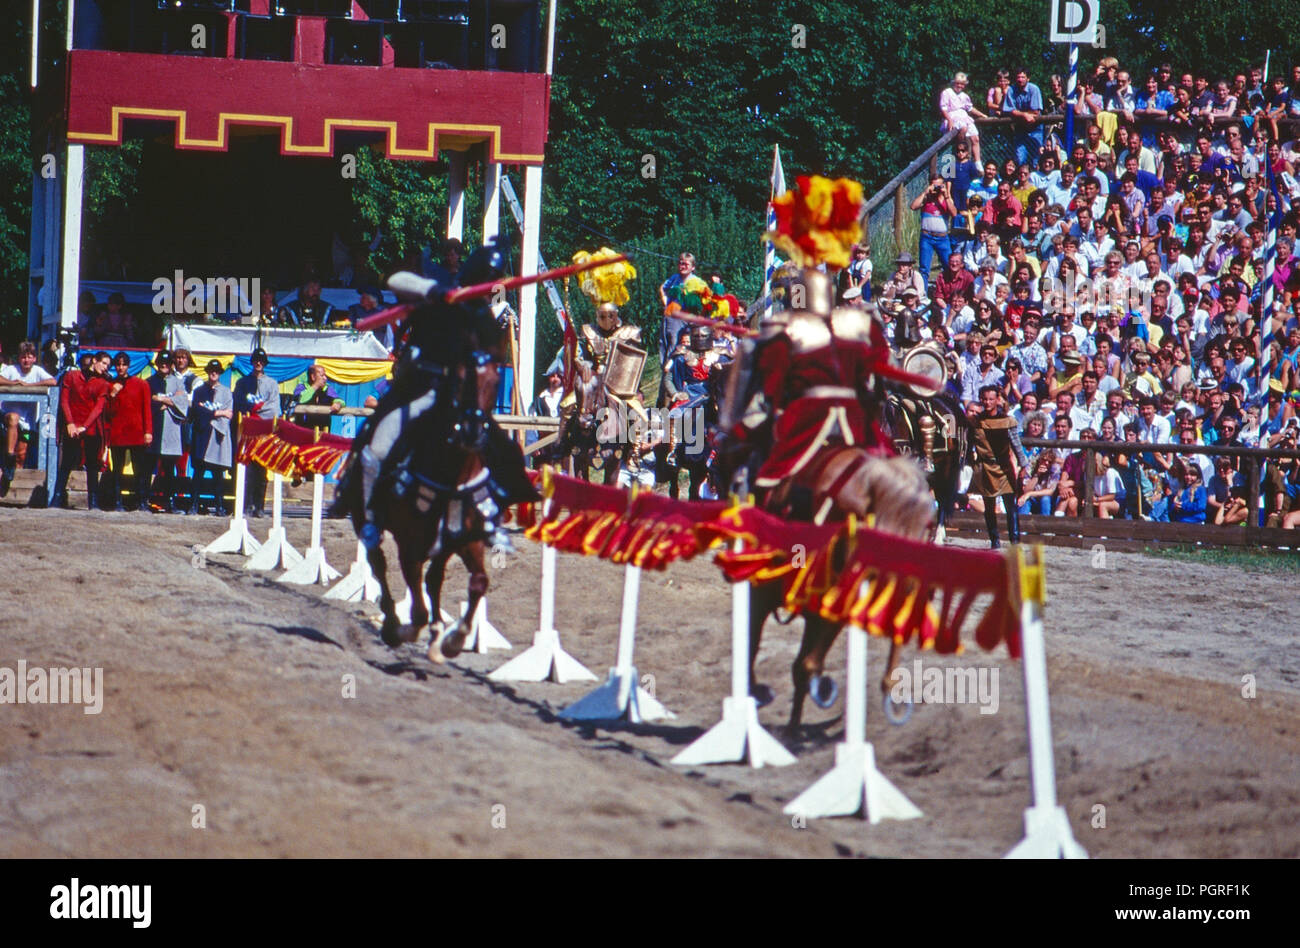 Beim Kaltenberger Ritterturnier Zweikampf auf Schloss Hof, Allemagne 1991. Lors de la joute Kaltenberg knights festival au Château de Hof, Allemagne 1991. Banque D'Images